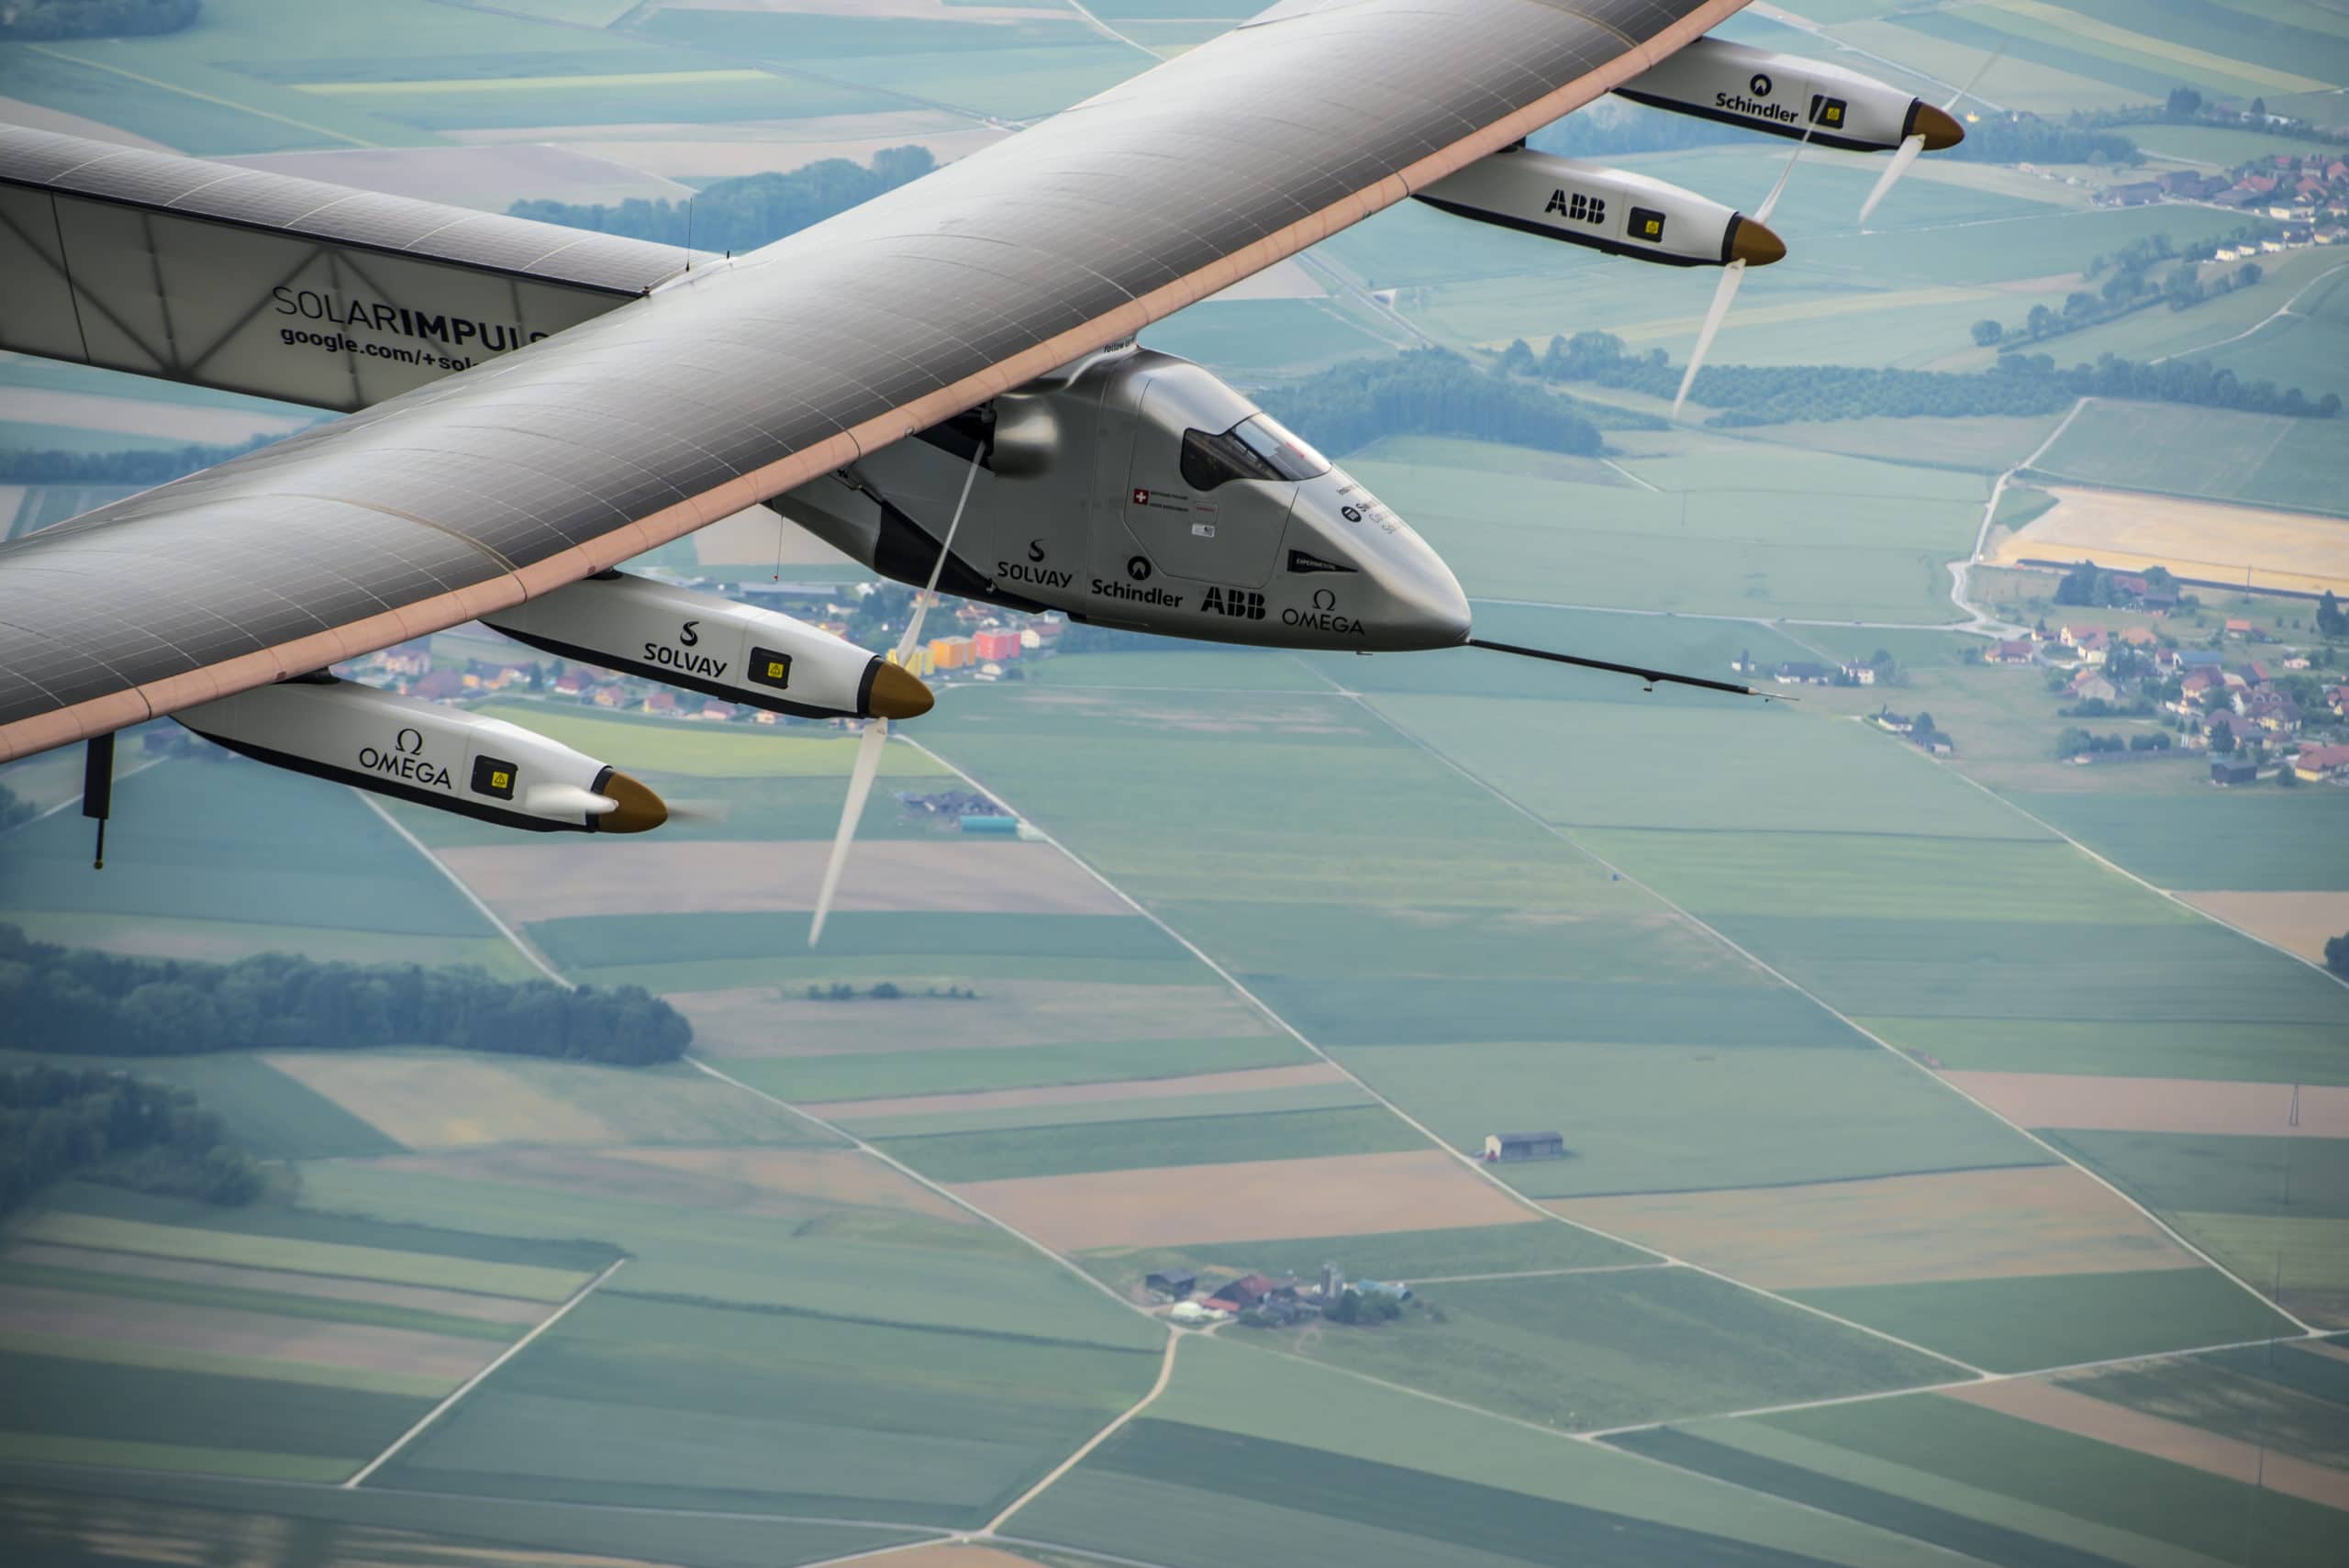 Solar Impulse 2 on a test flight over Payerne, Switzerland. Image via Solar Impulse